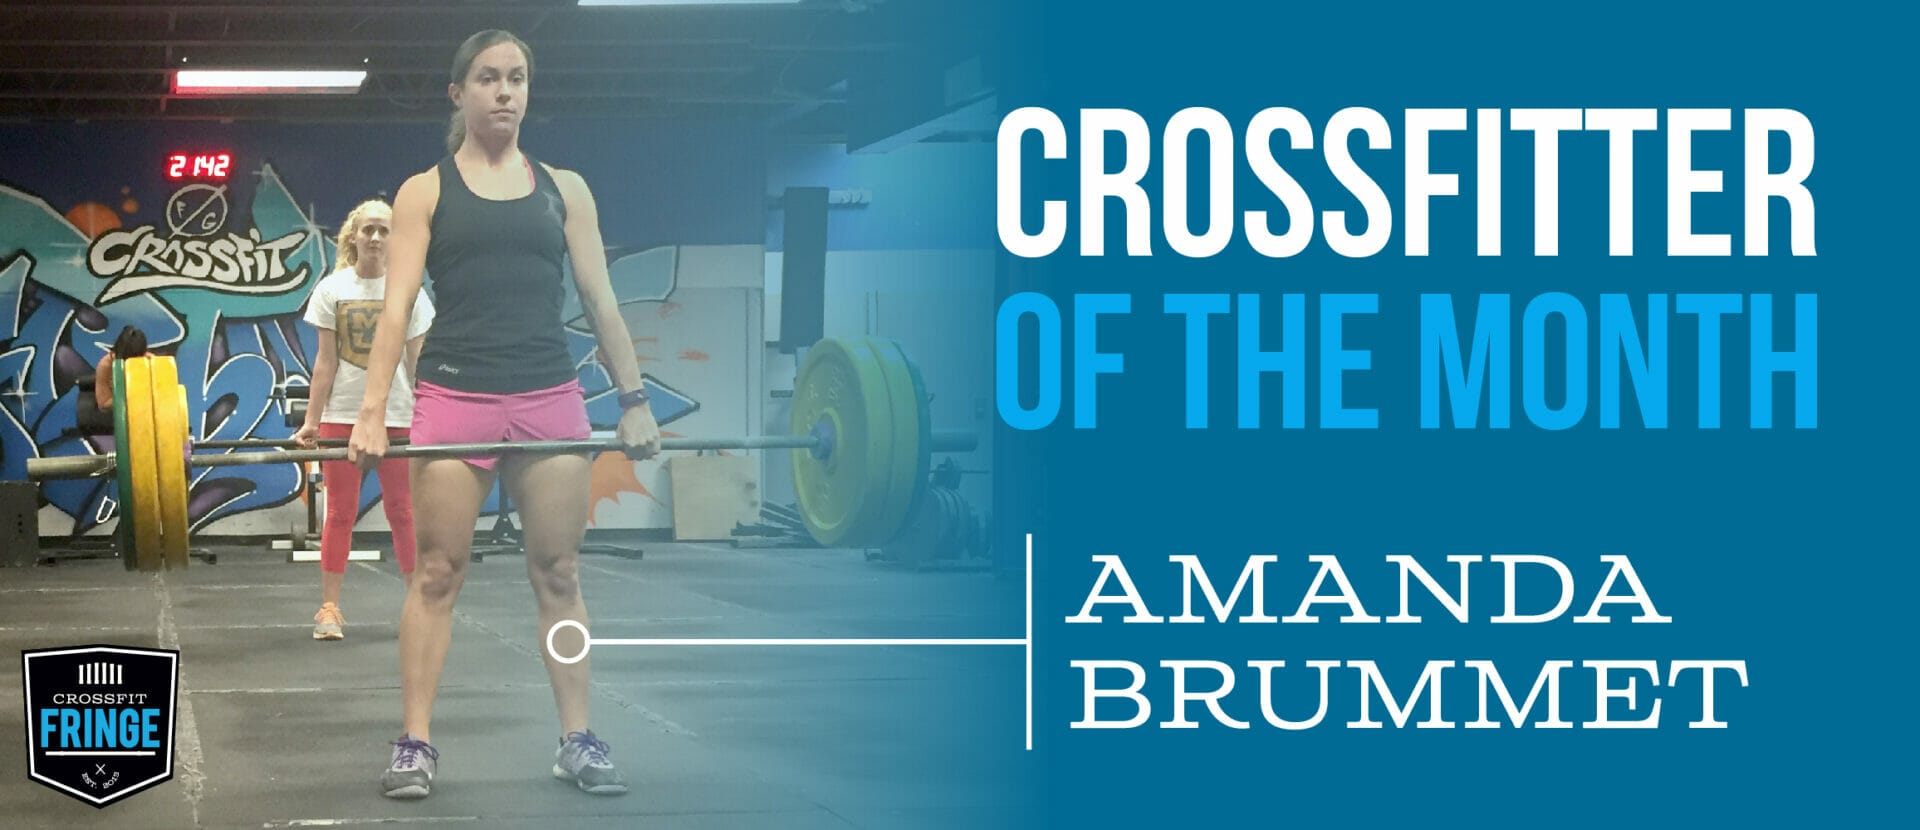 CrossFitter of the Month: Amanda Brummet